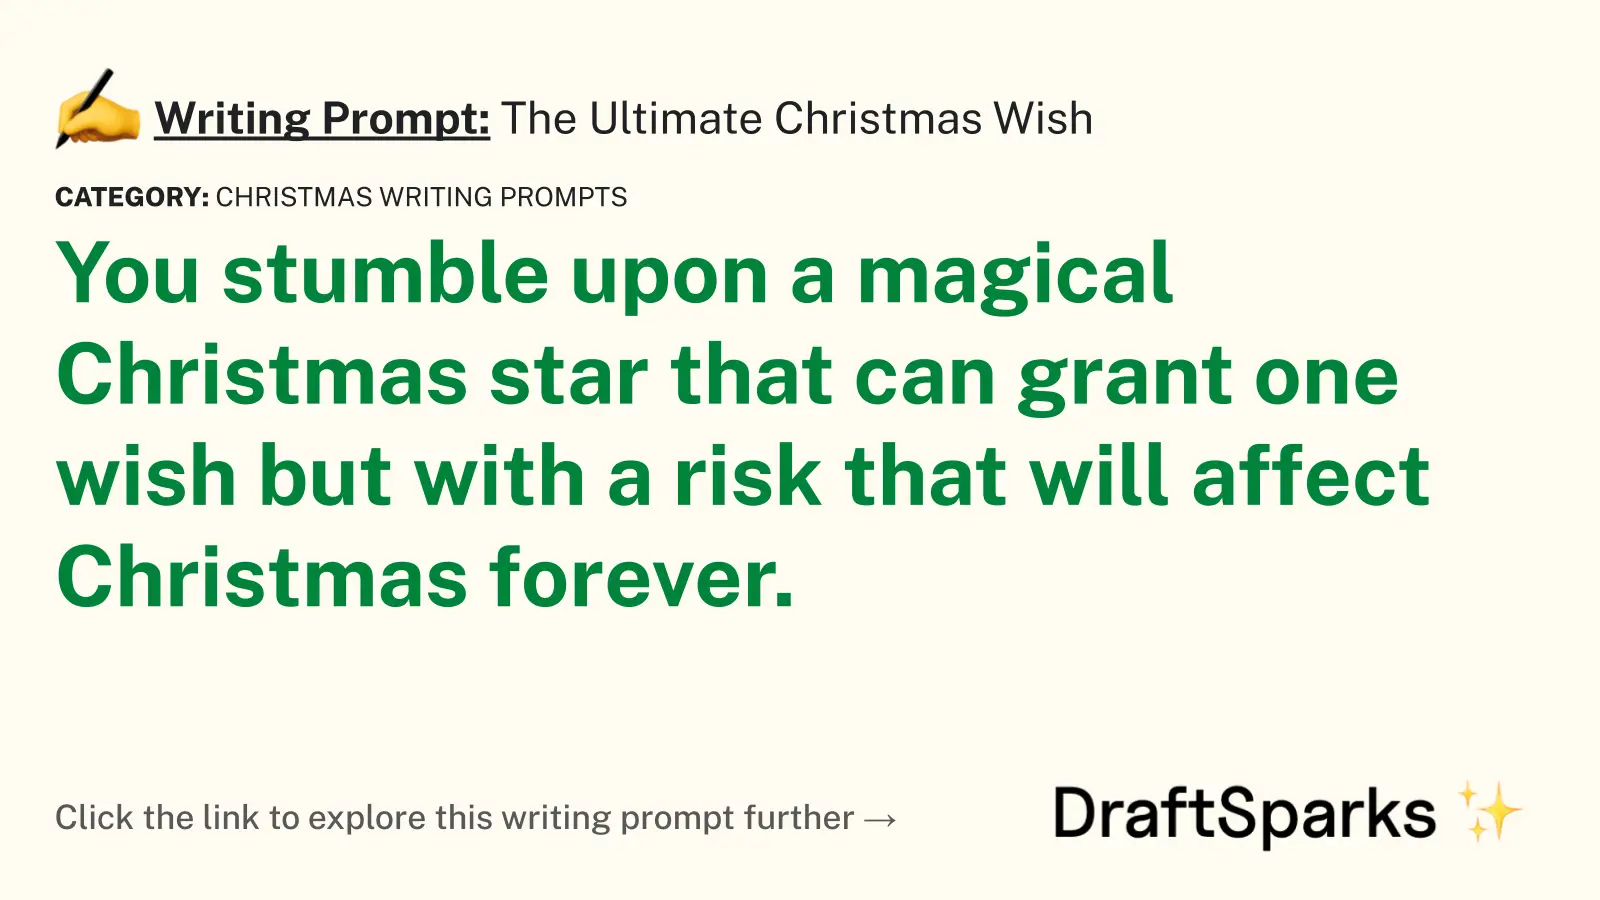 The Ultimate Christmas Wish